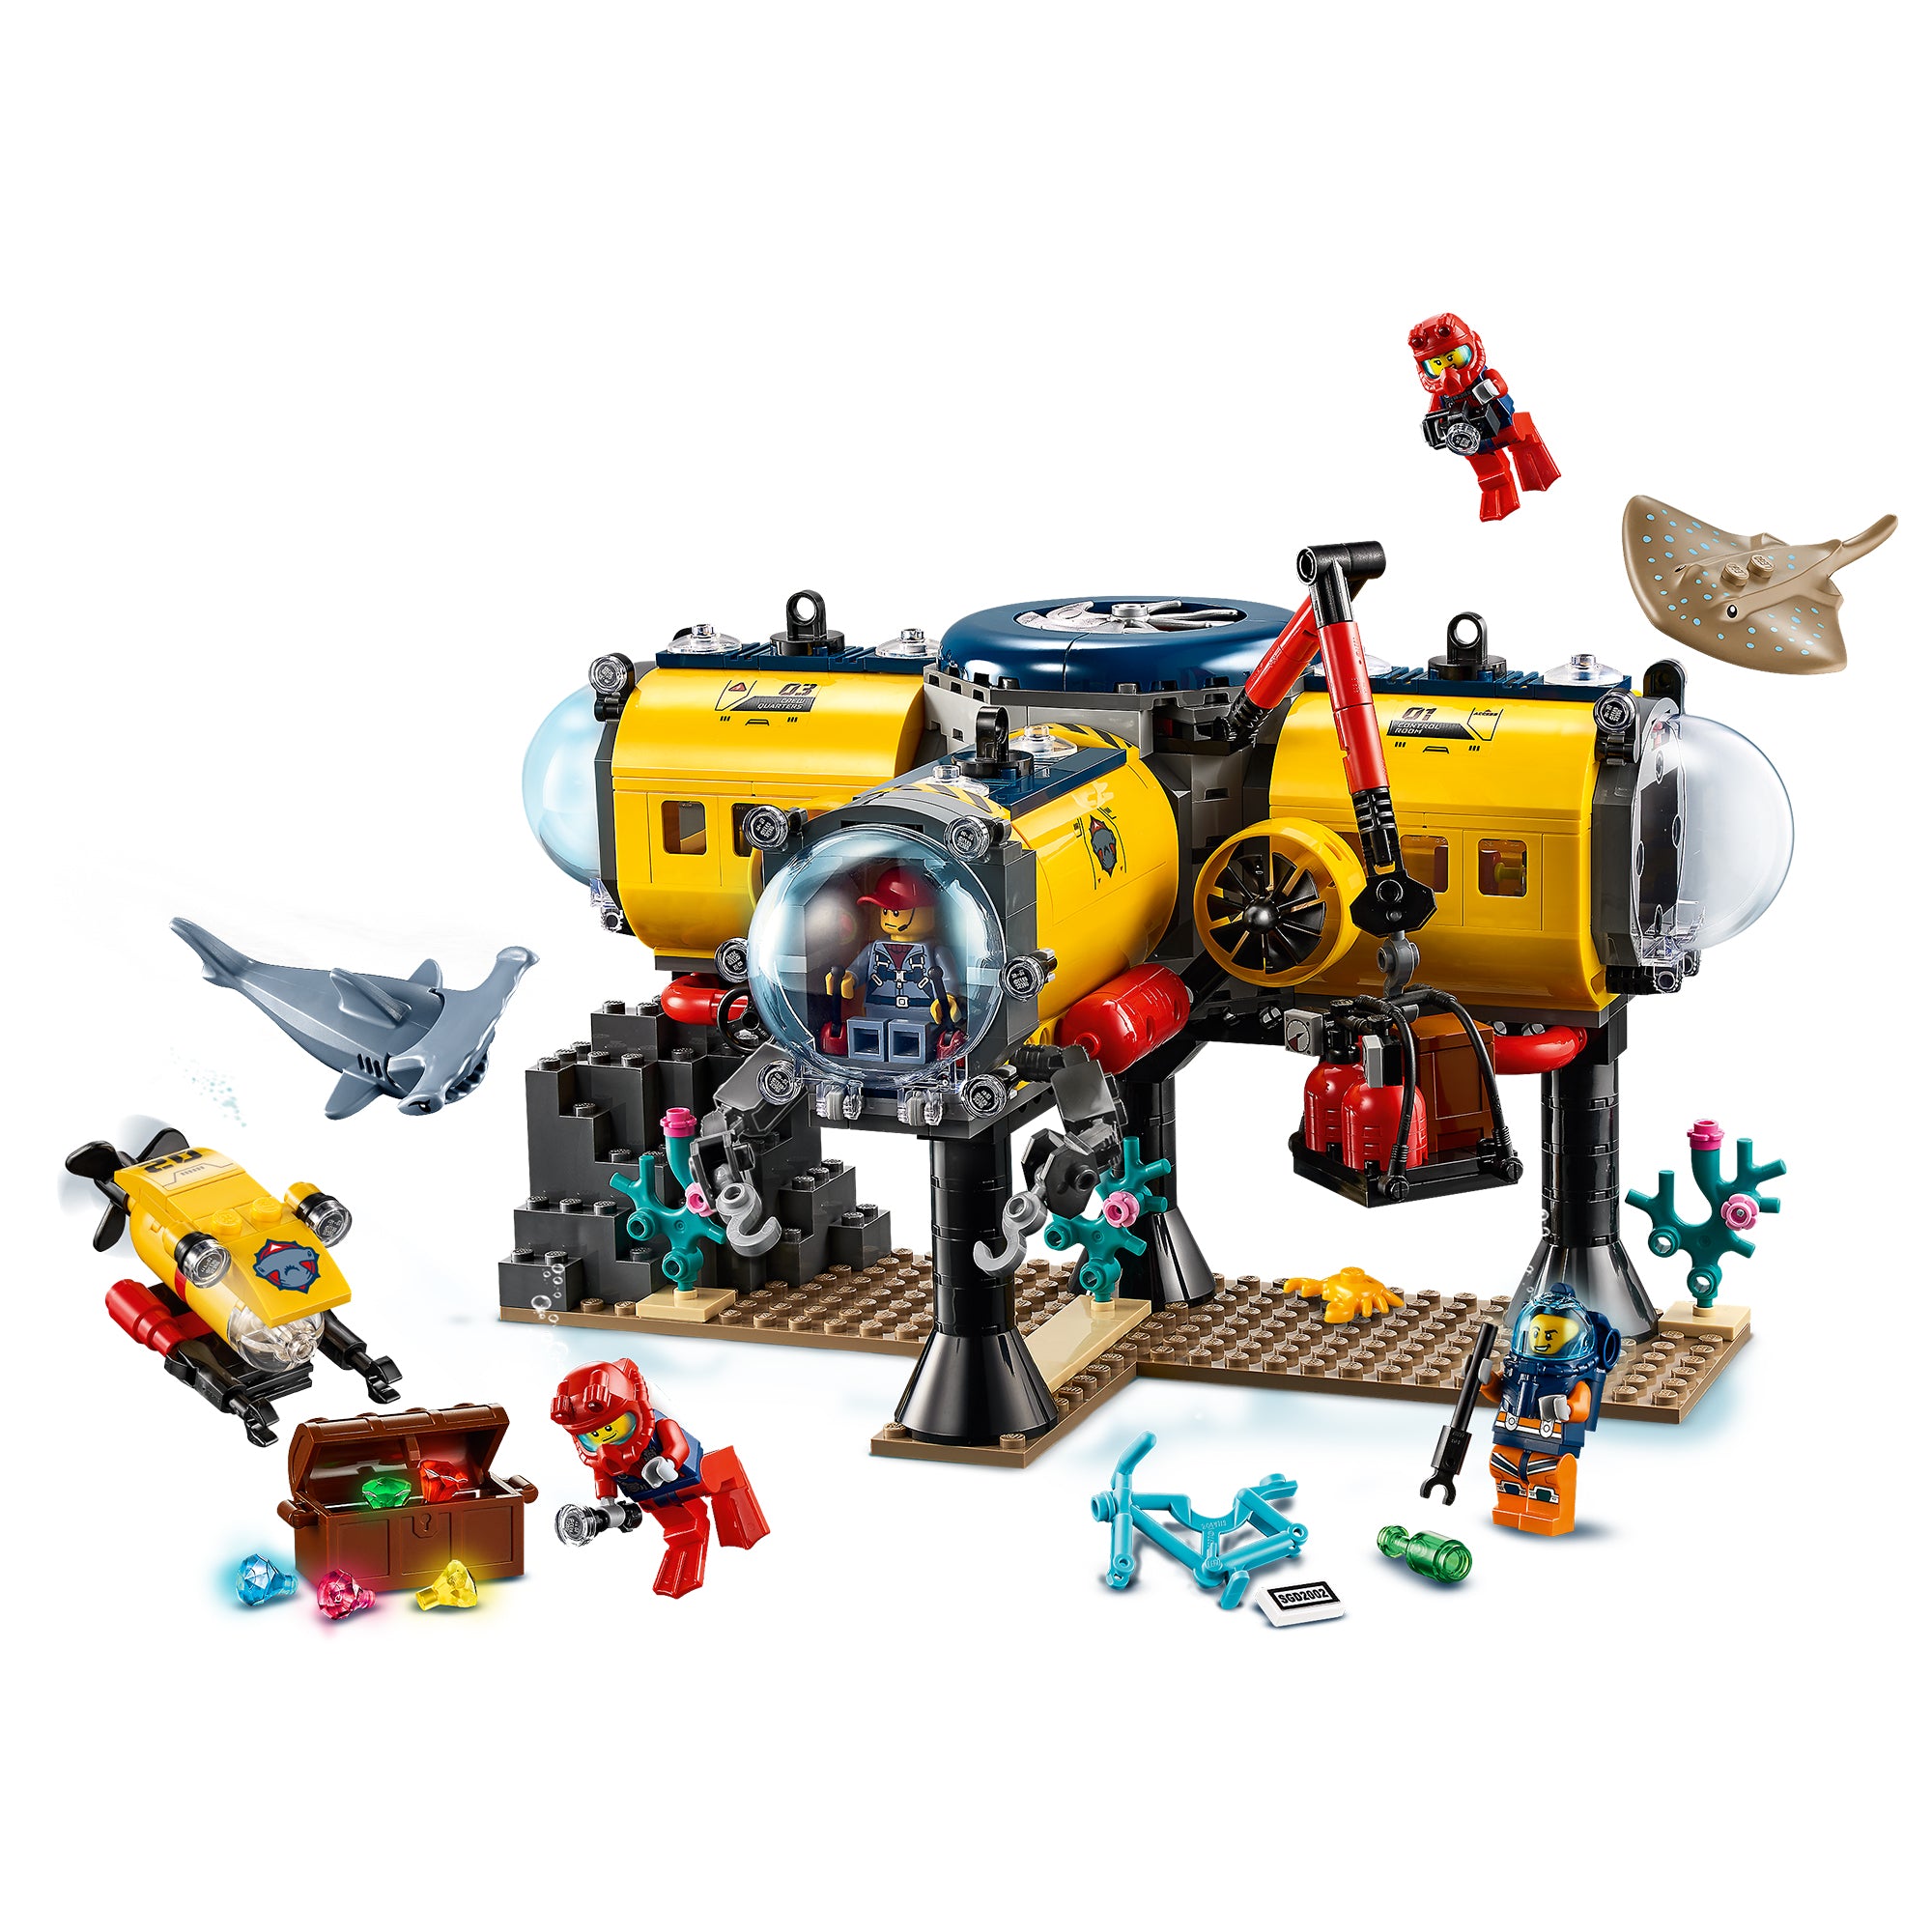 LEGO® City Ocean Exploration Base Deep Sea Set 60265 Default Title